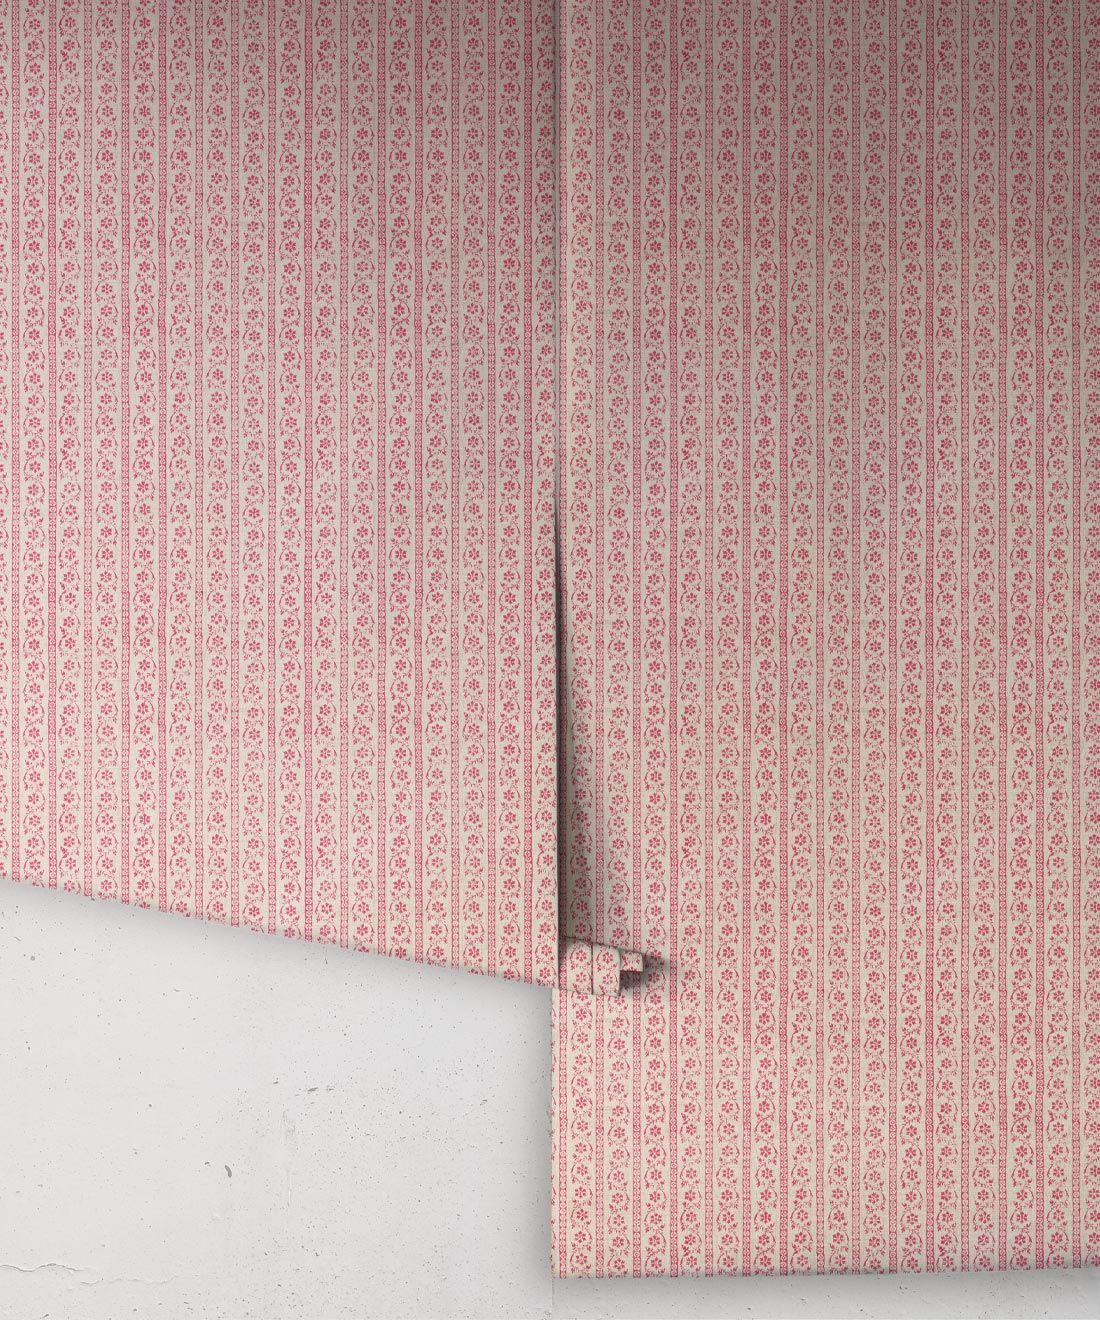 Daisy Chain Wallpaper • Poppy Natural • Rolls